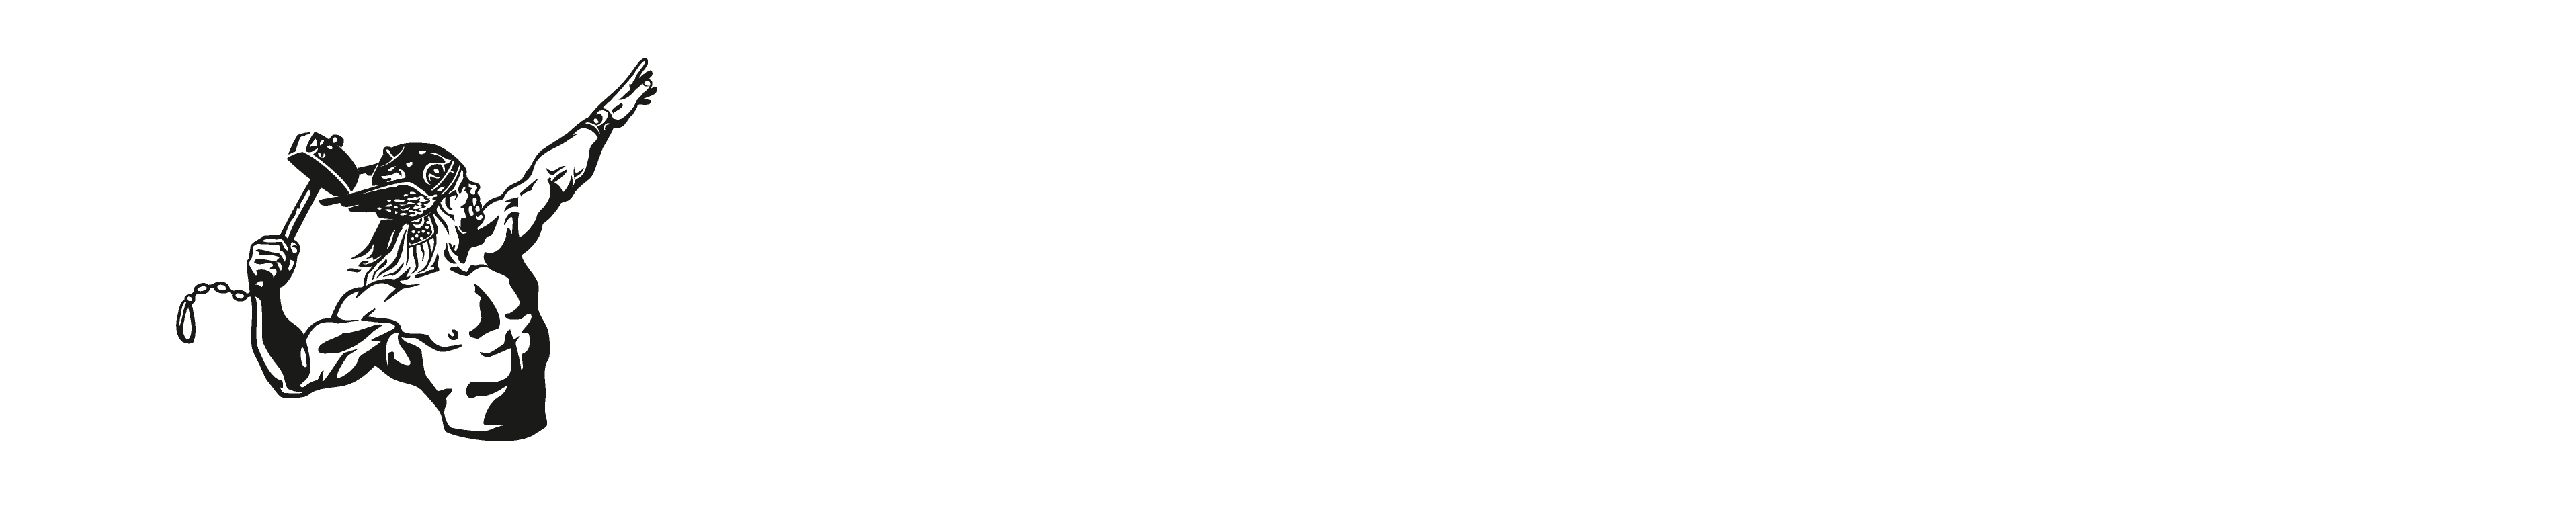 Tunderman logo